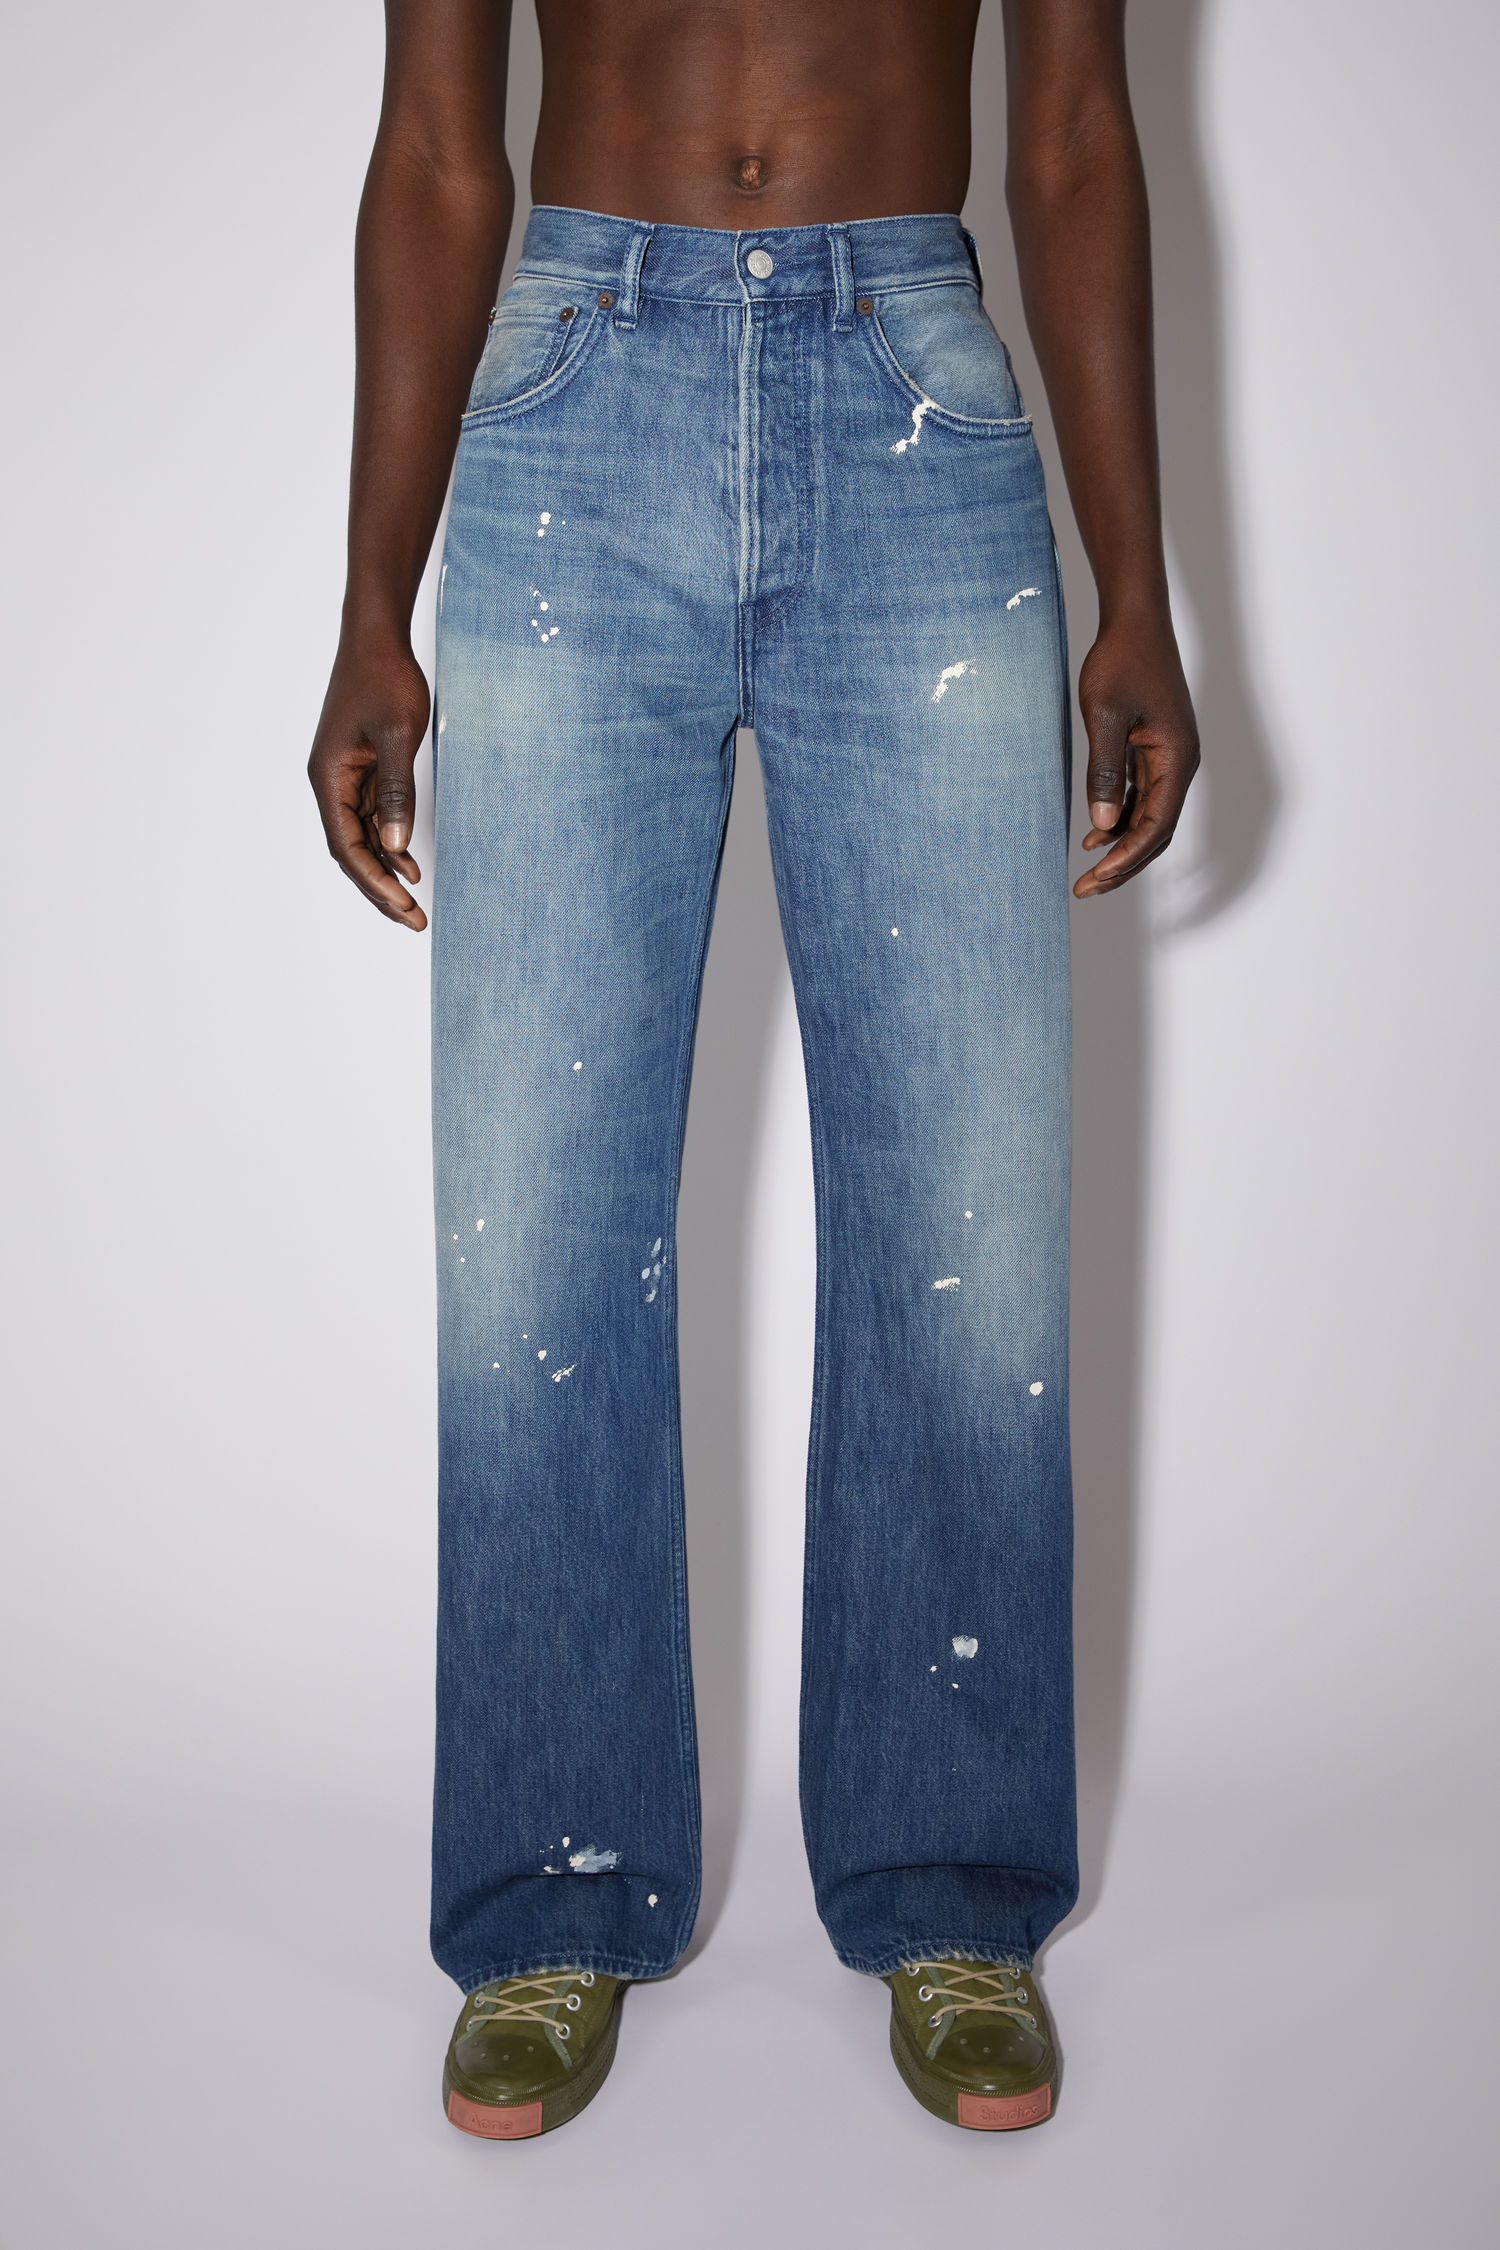 Acne Studios – Men’s jeans